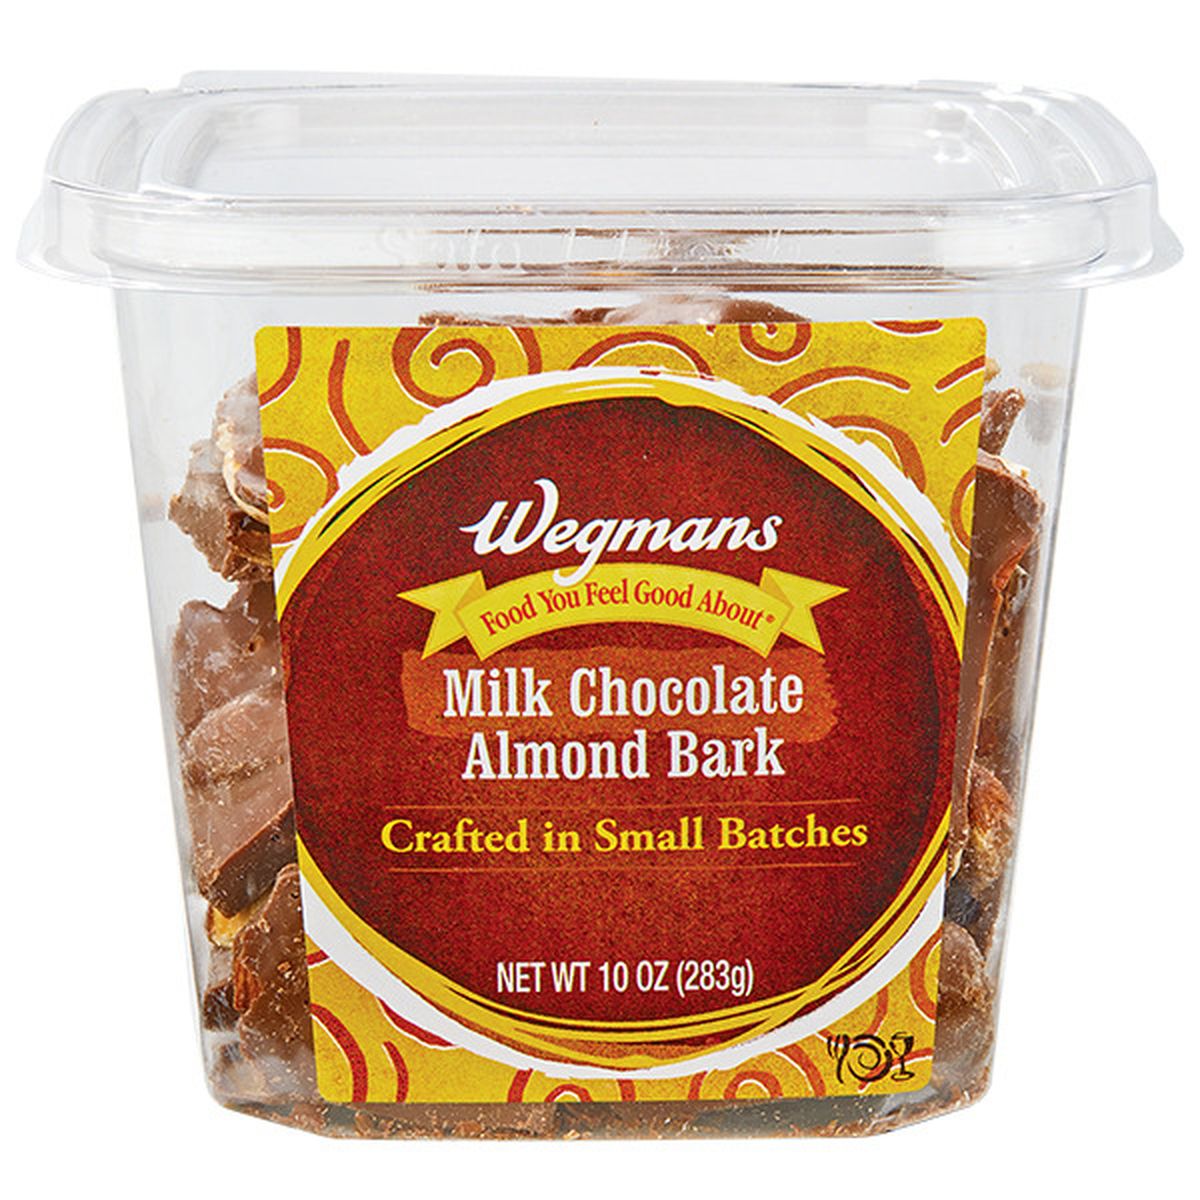 Calories in Wegmans Milk Chocolate Almond Bark